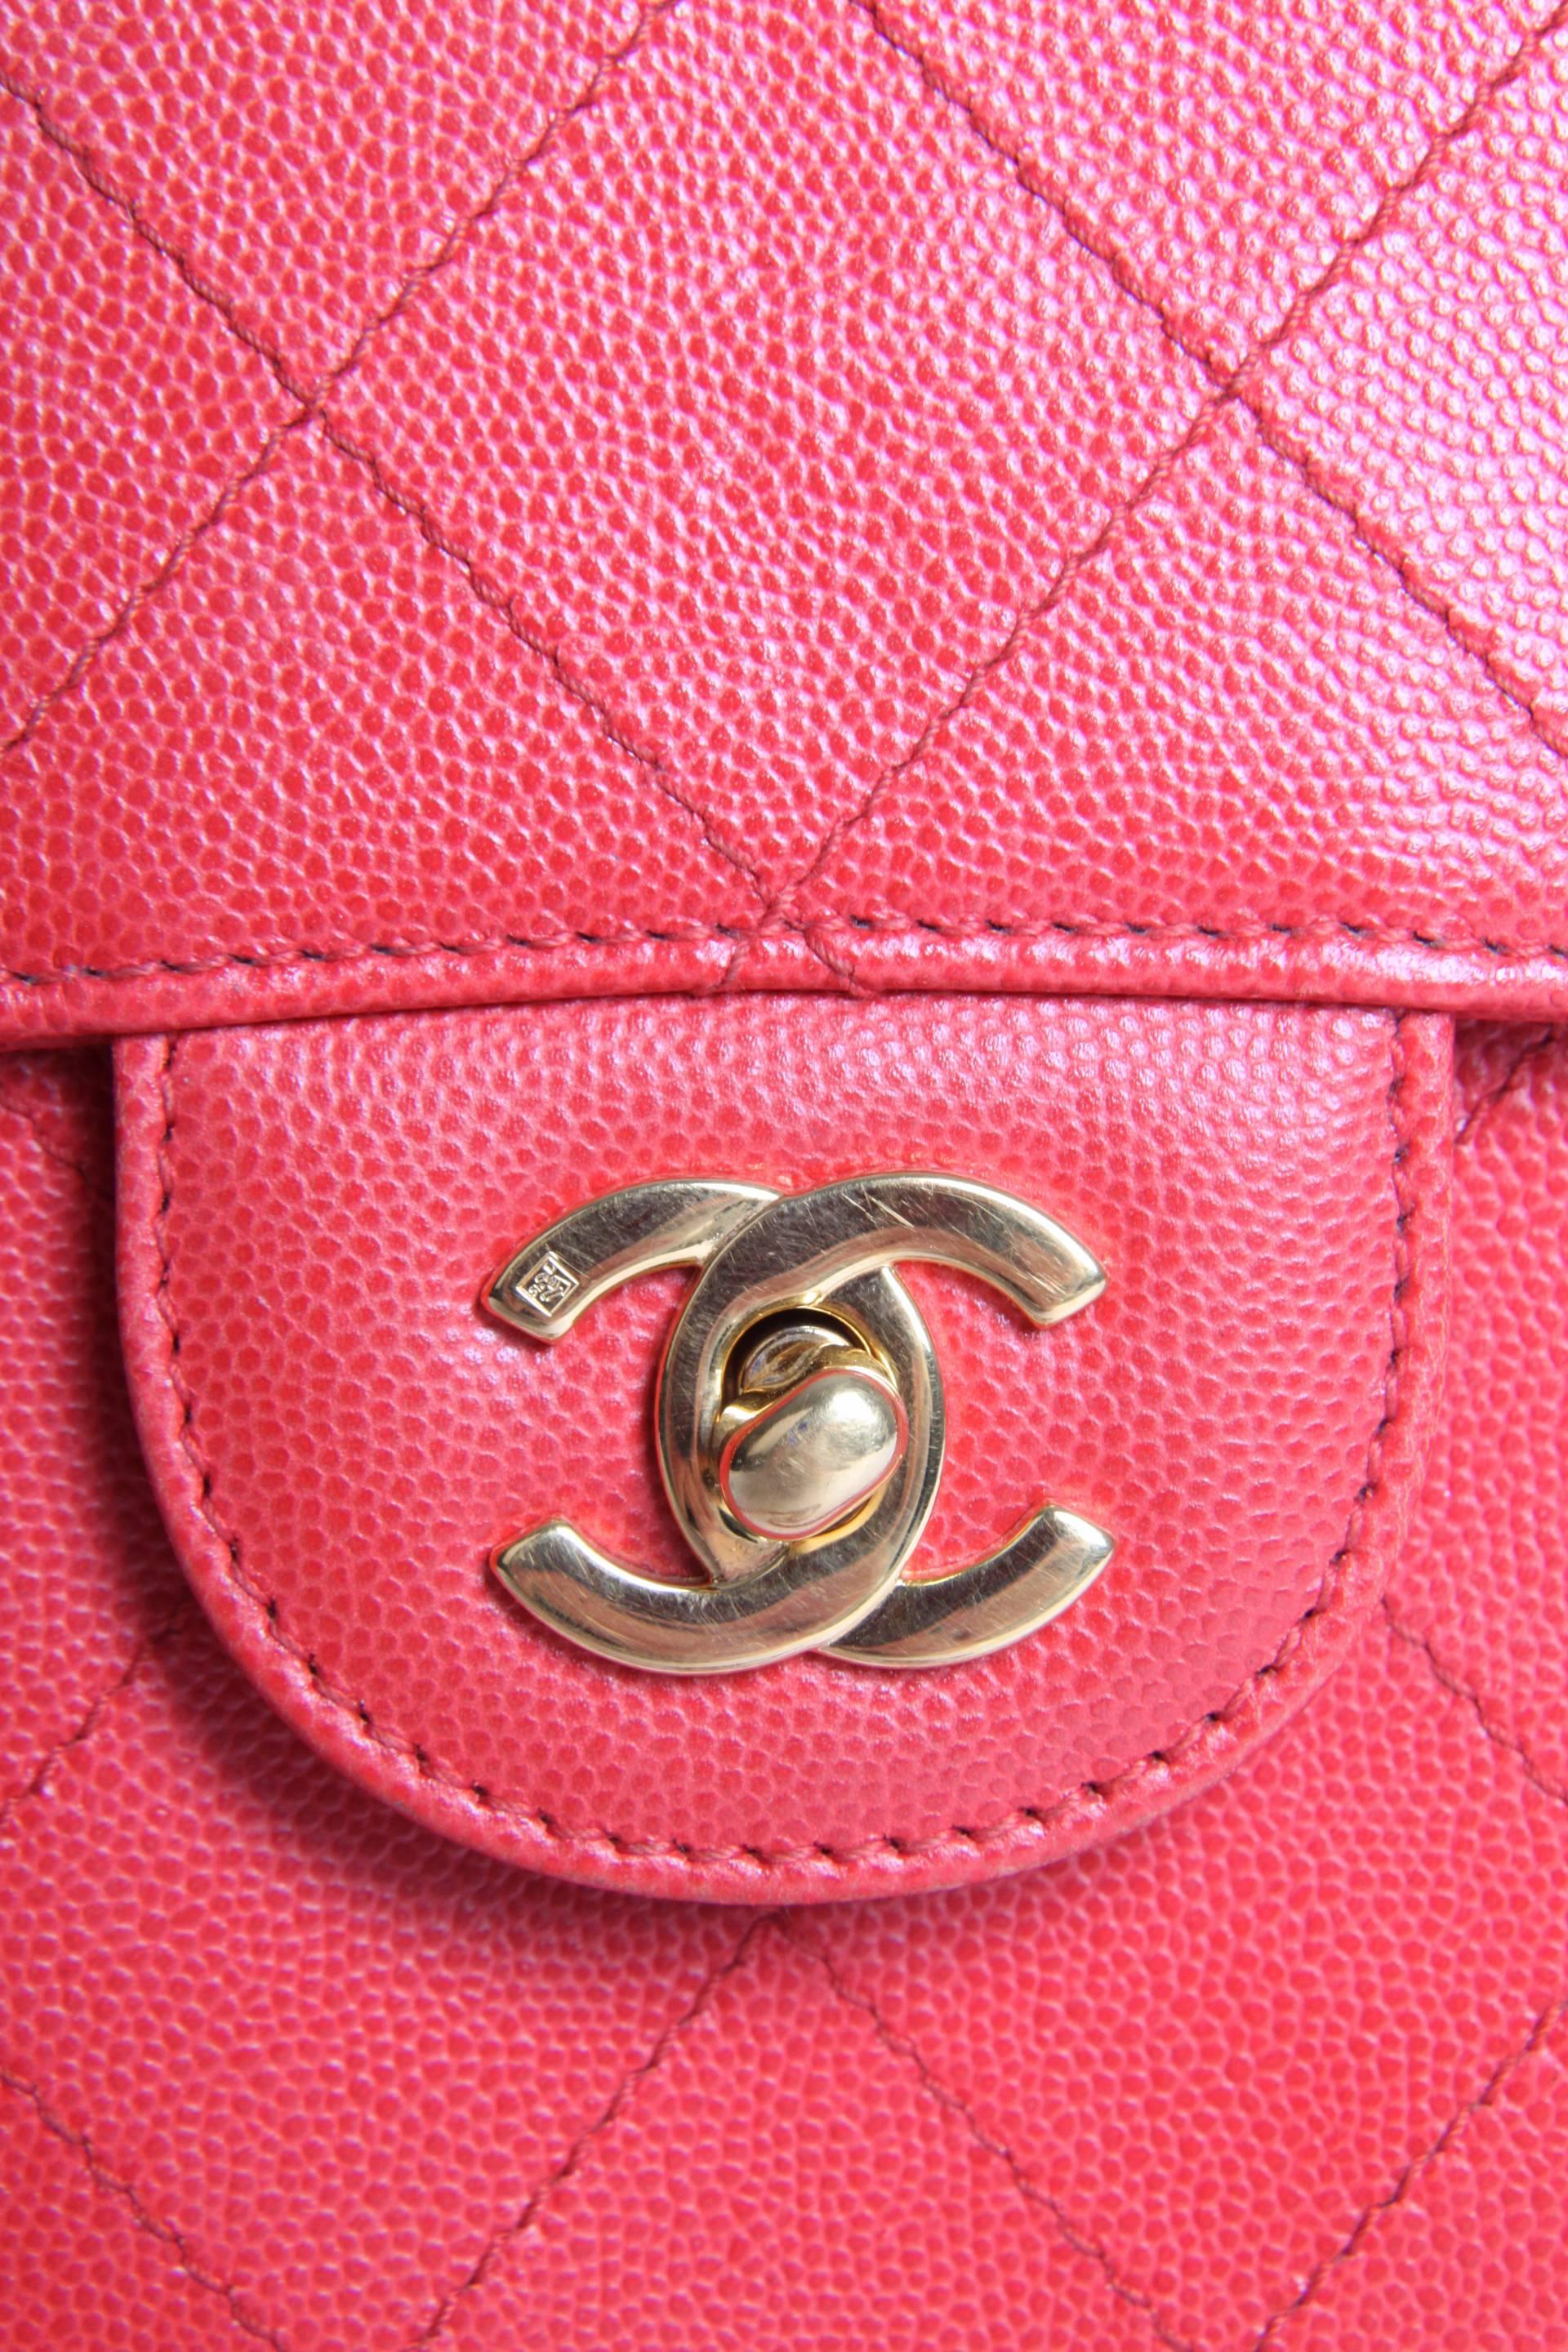 1997 Chanel Jumbo Flap Bag Vintage - red caviar leather -crossbody 1